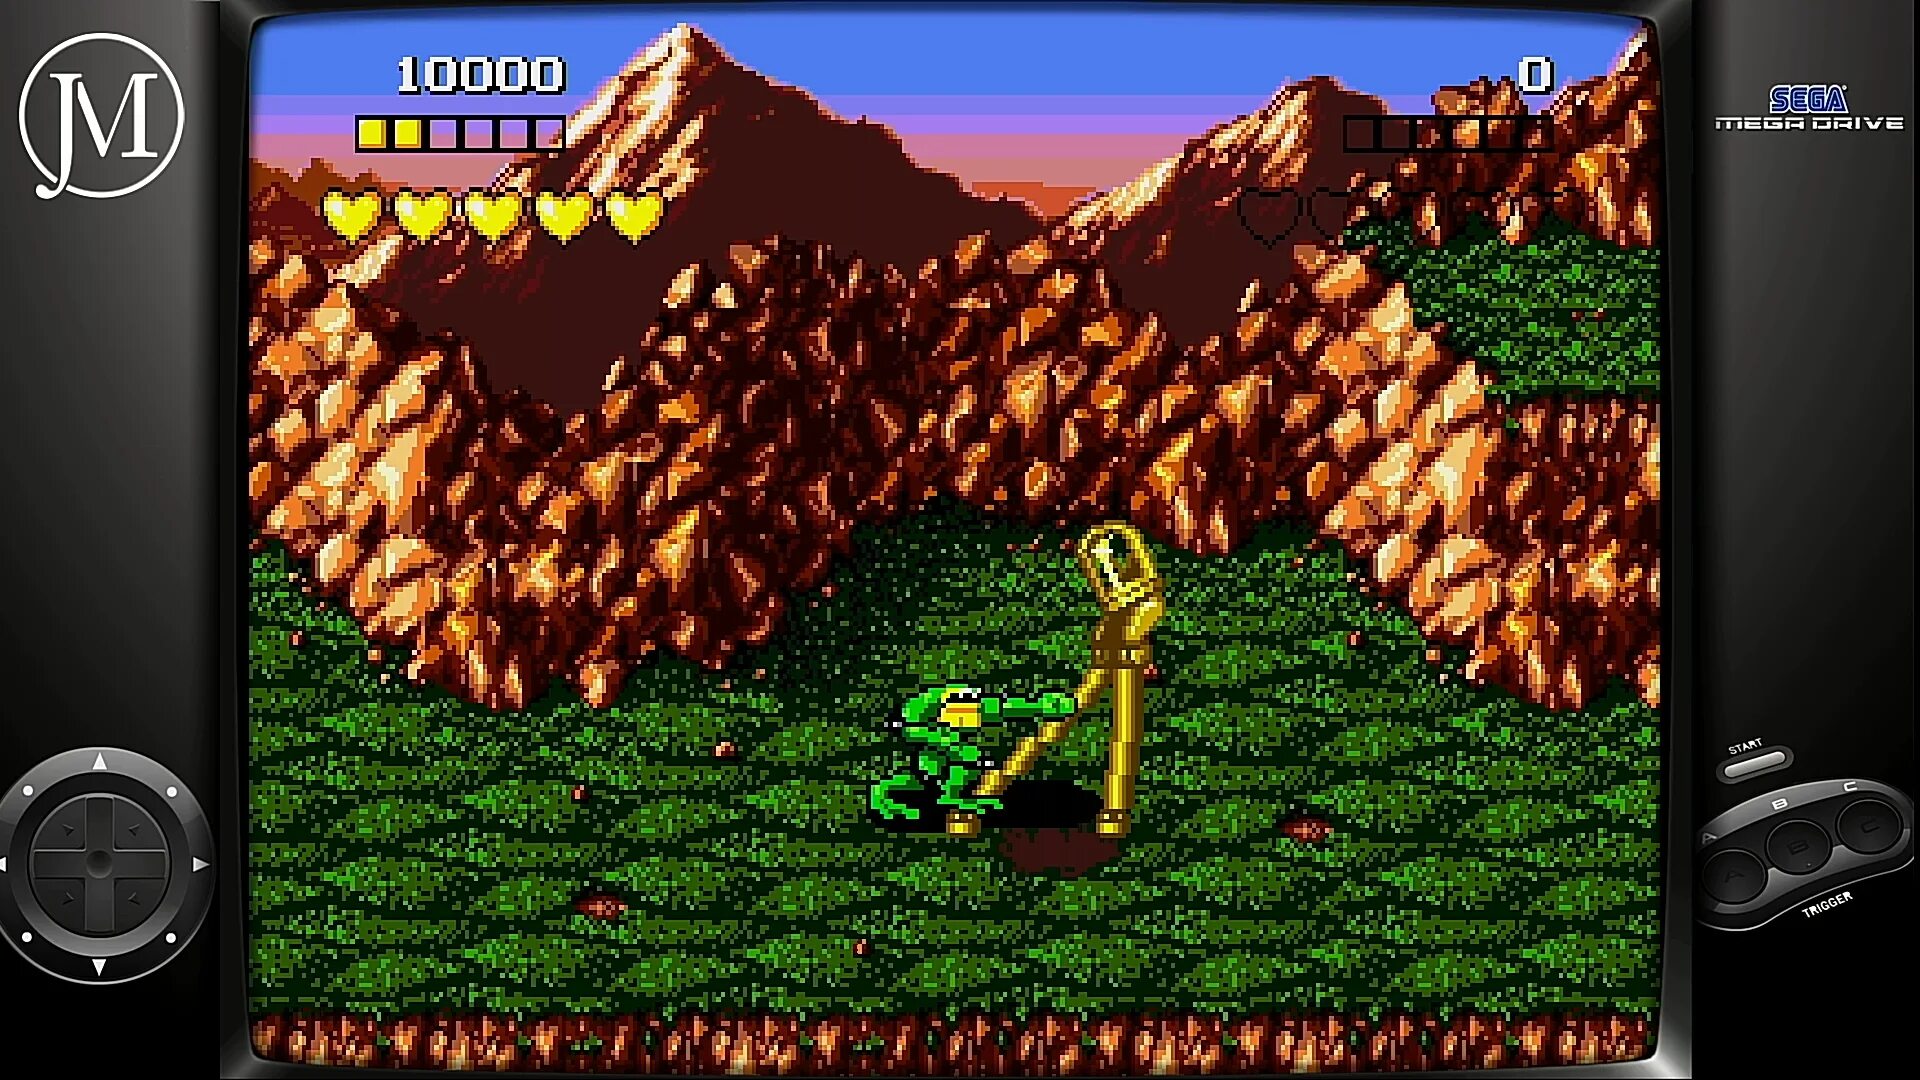 Батл тодс сега. Игры сега боевые лягушки. Батлтоадс NES. Battletoads 1991. Sega game stick